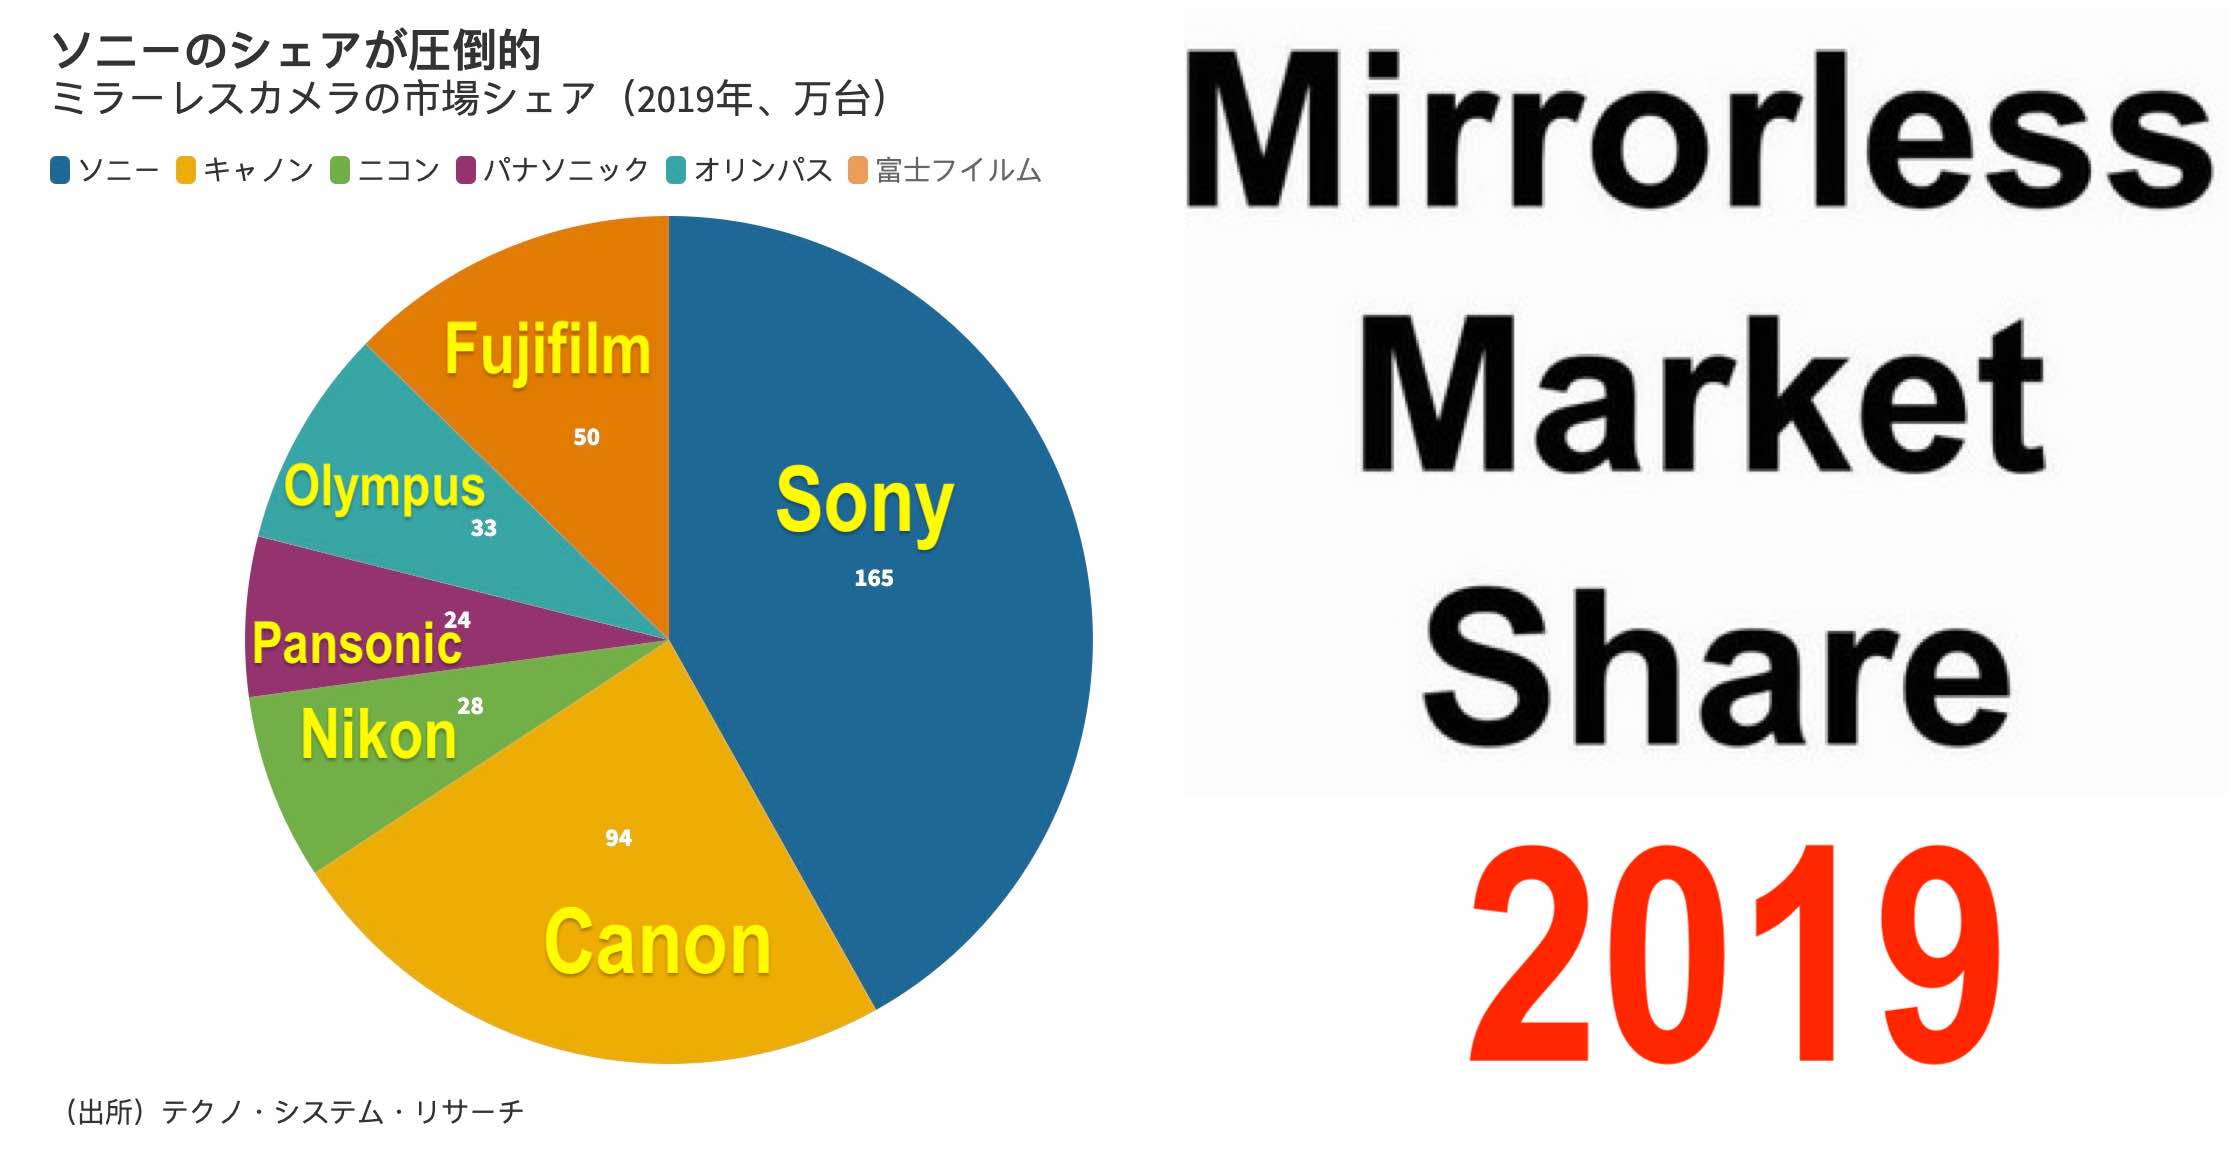 Mirrorless-Market-Share-2019.jpg